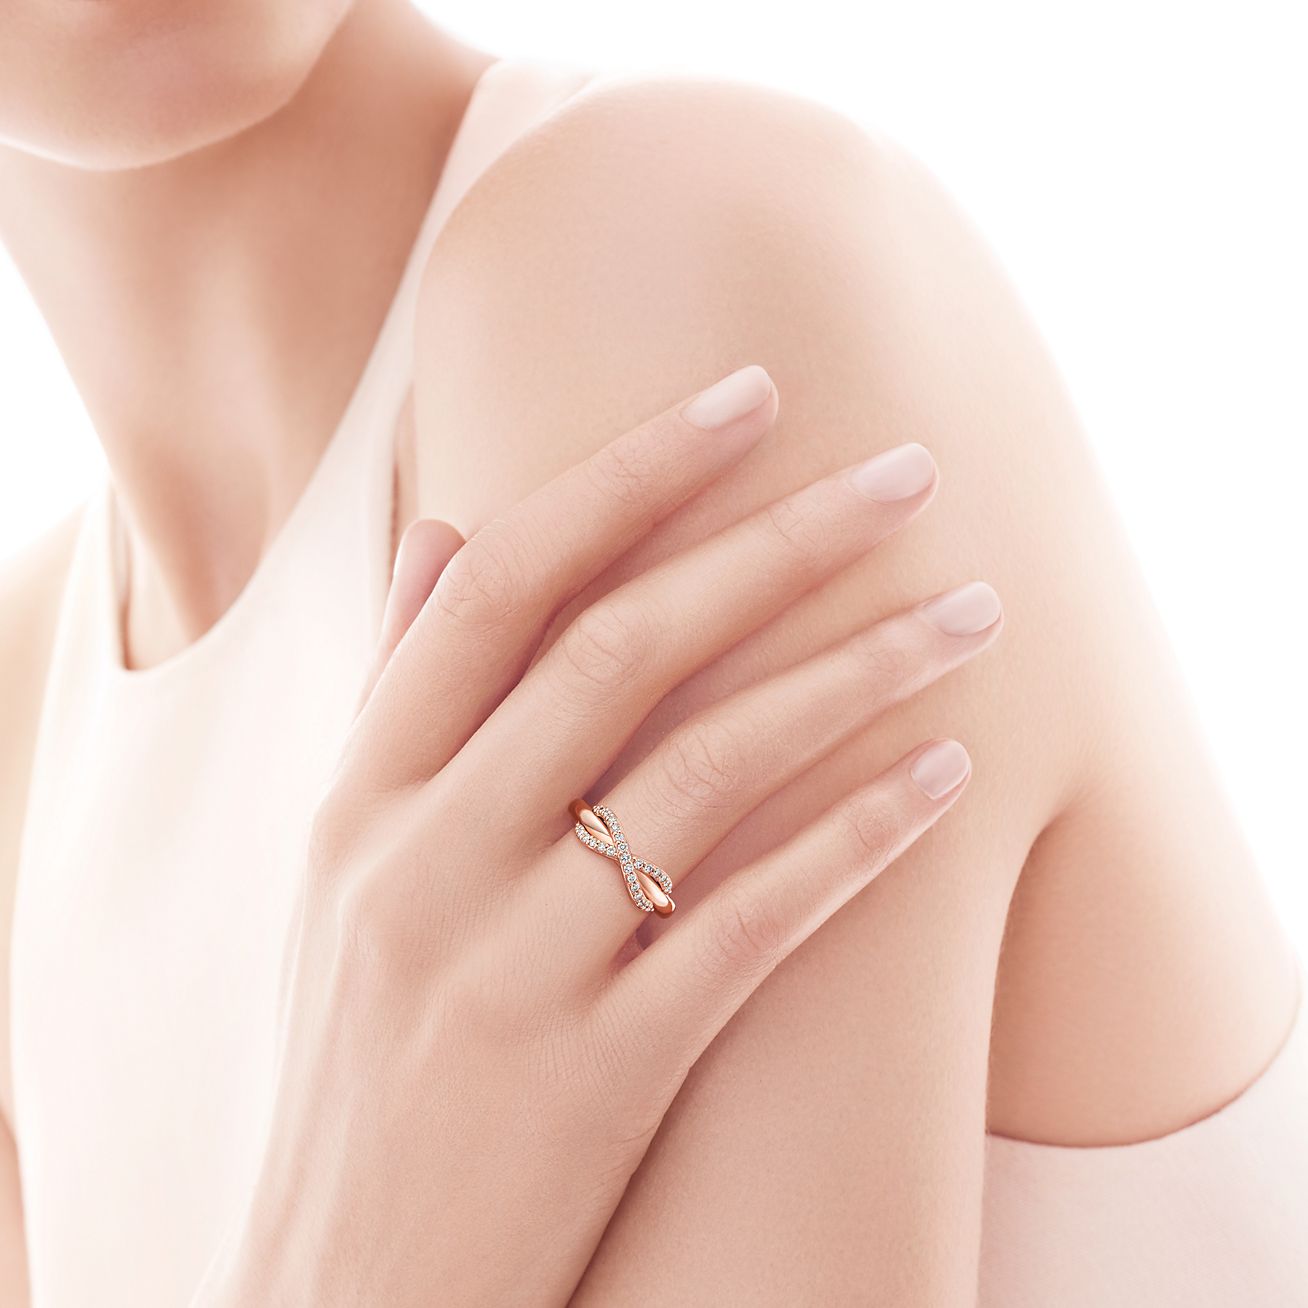 Tiffany Infinity 18k rose gold ring 